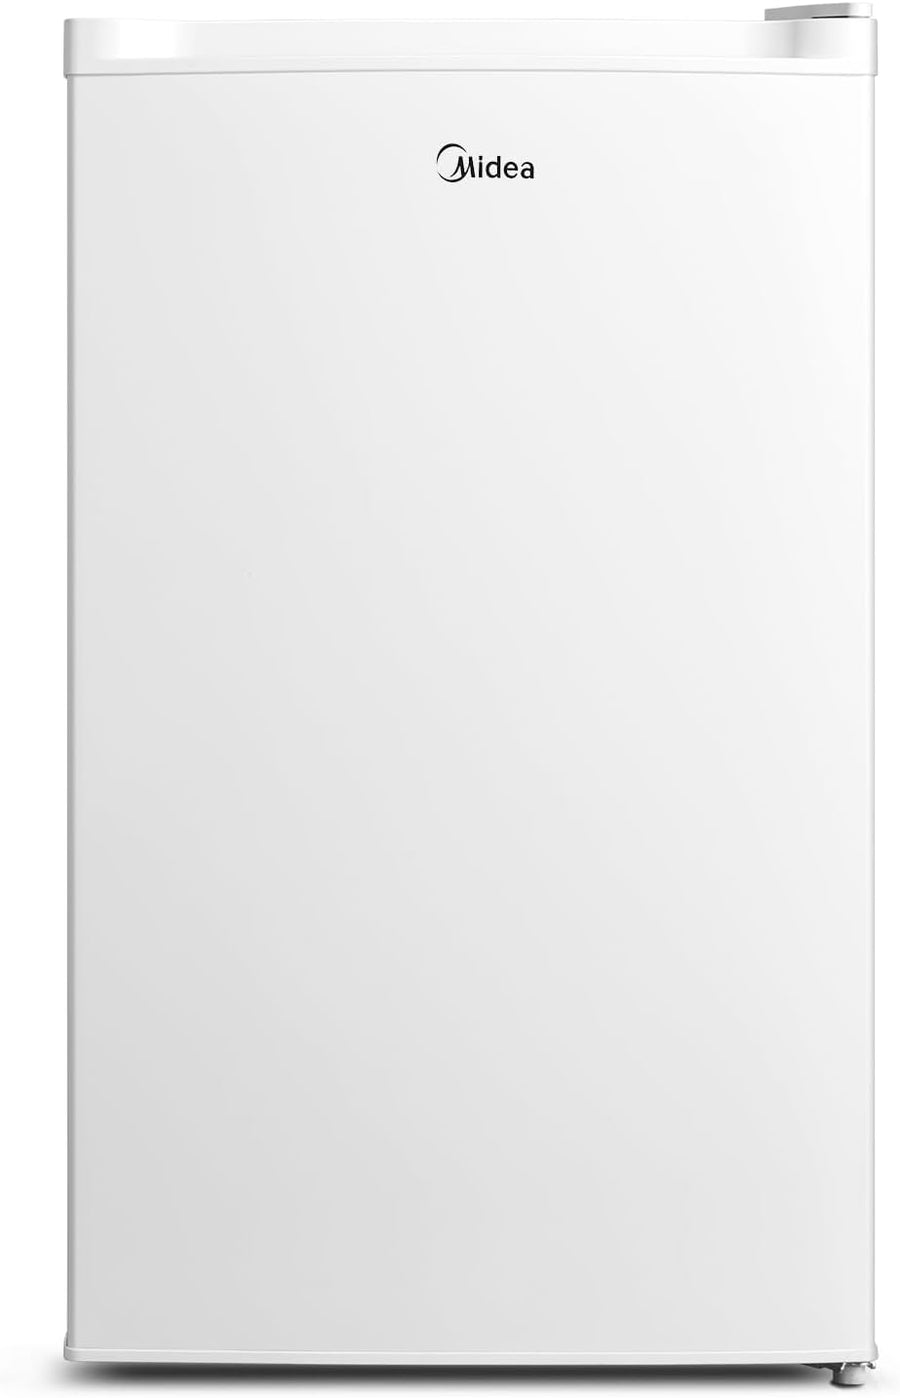 Midea WHS-109FW1 Upright Freezer, 3.0 Cubic Feet, White - $140